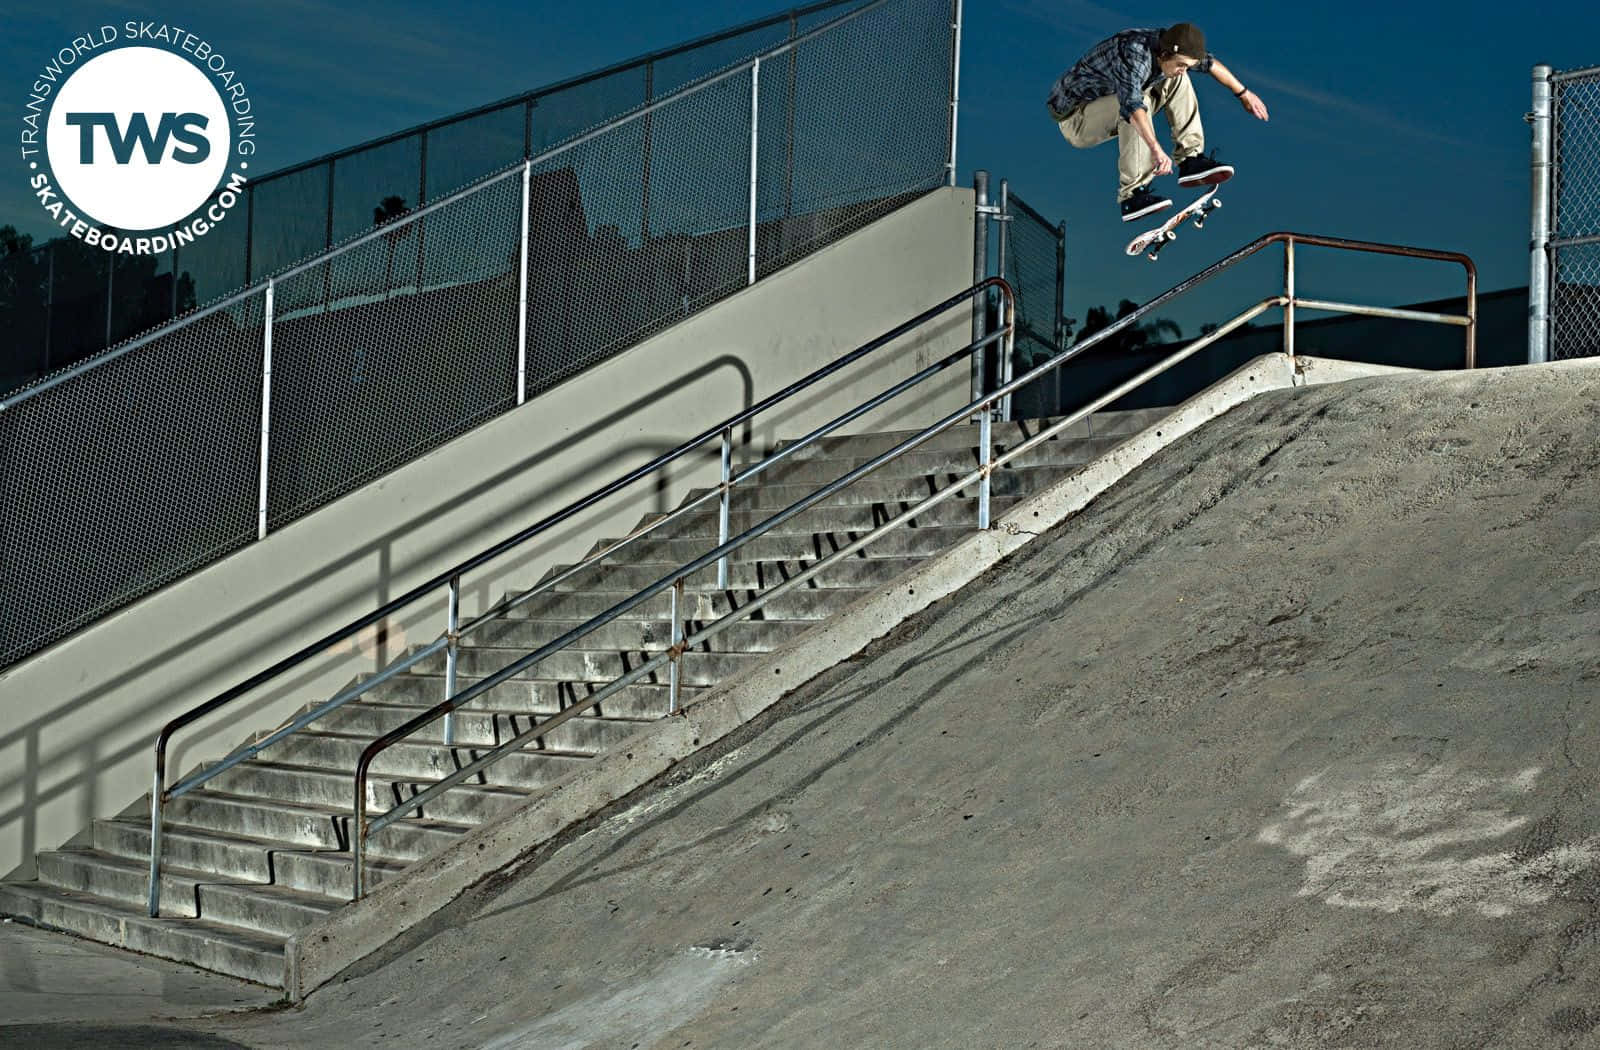 Skateboarder Midair Trick Over Stairs.jpg Wallpaper